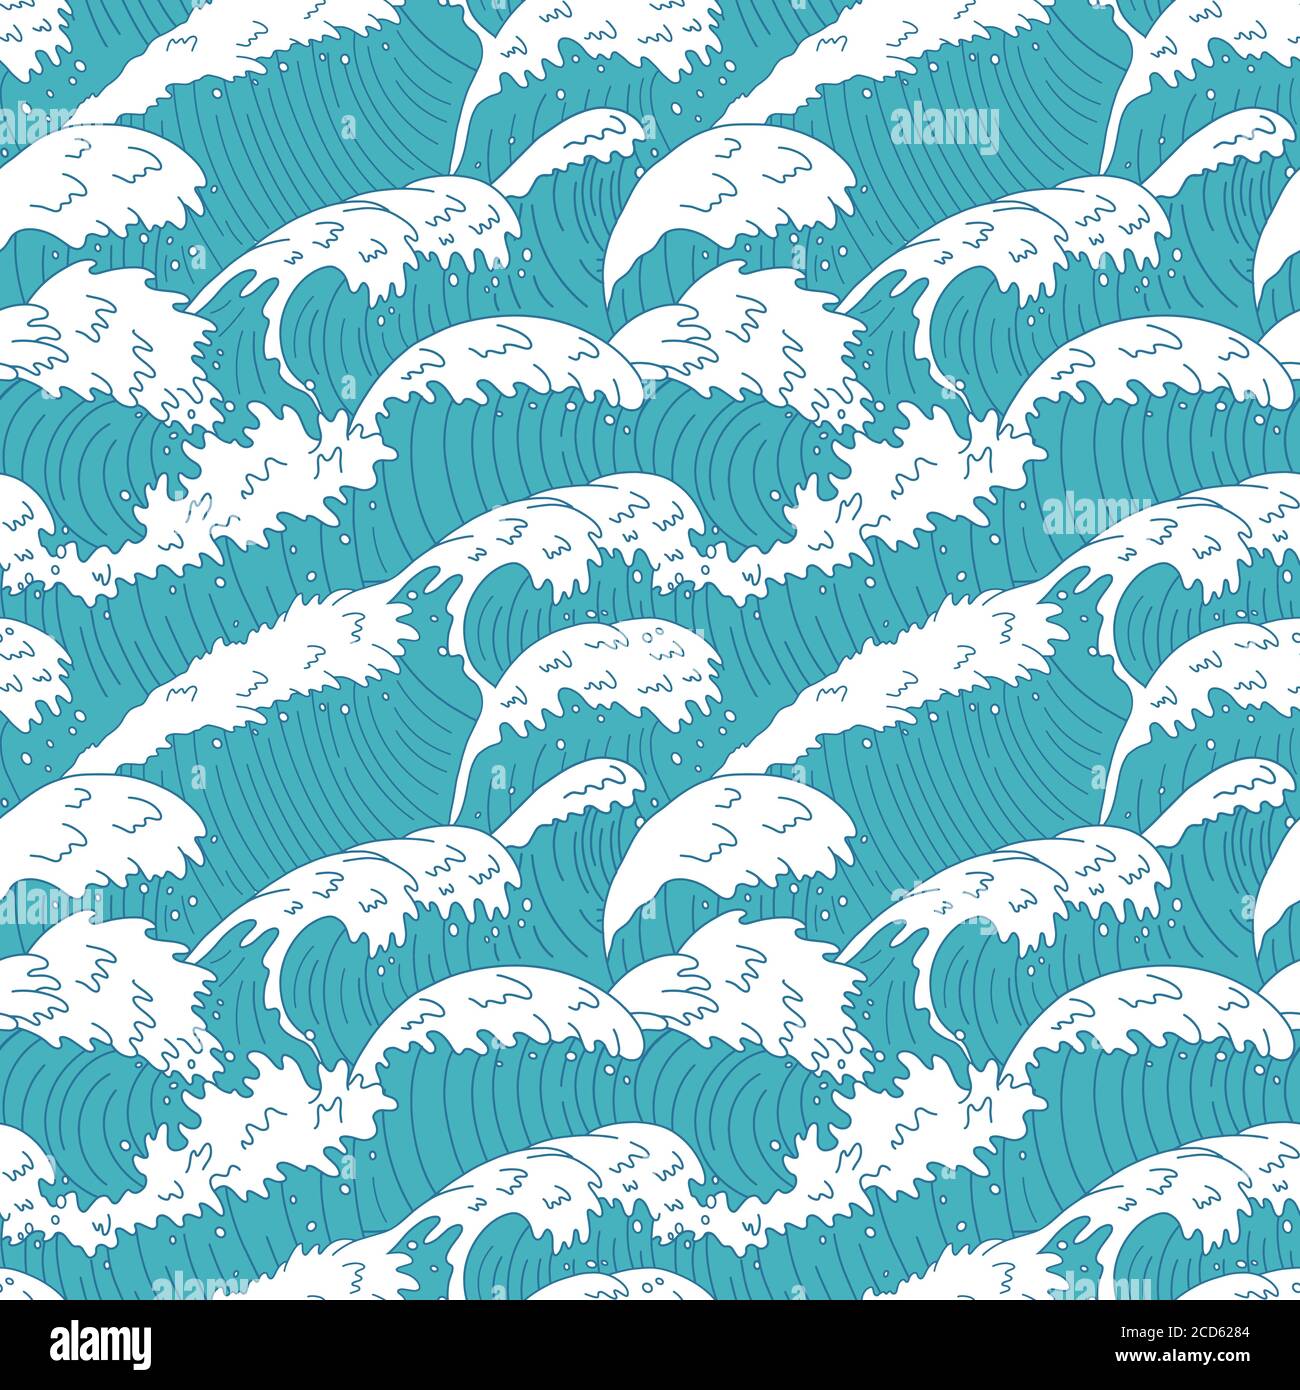 Seewellen nahtloses Muster. Ozean Wasser Wellenlinien, tobende Kurve Meereswellen, Sommer Strand Wellen Sturm Textur Vektor Hintergrund Illustration Stock Vektor